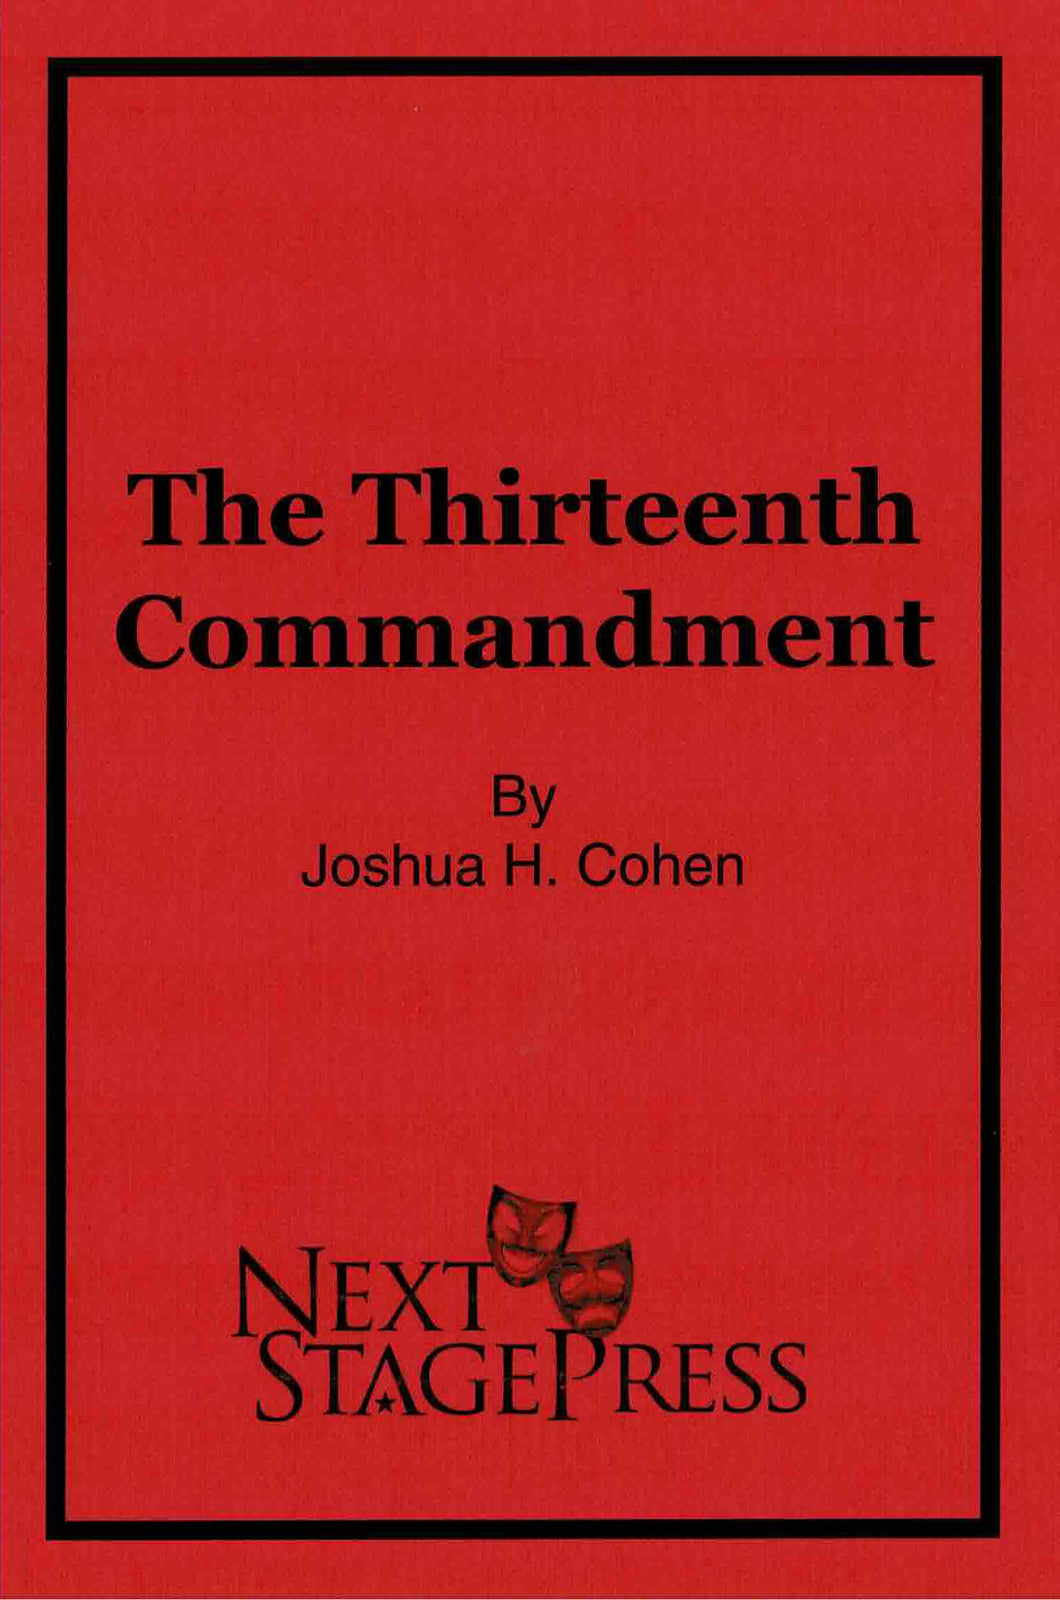 The Thirteenth Commandment